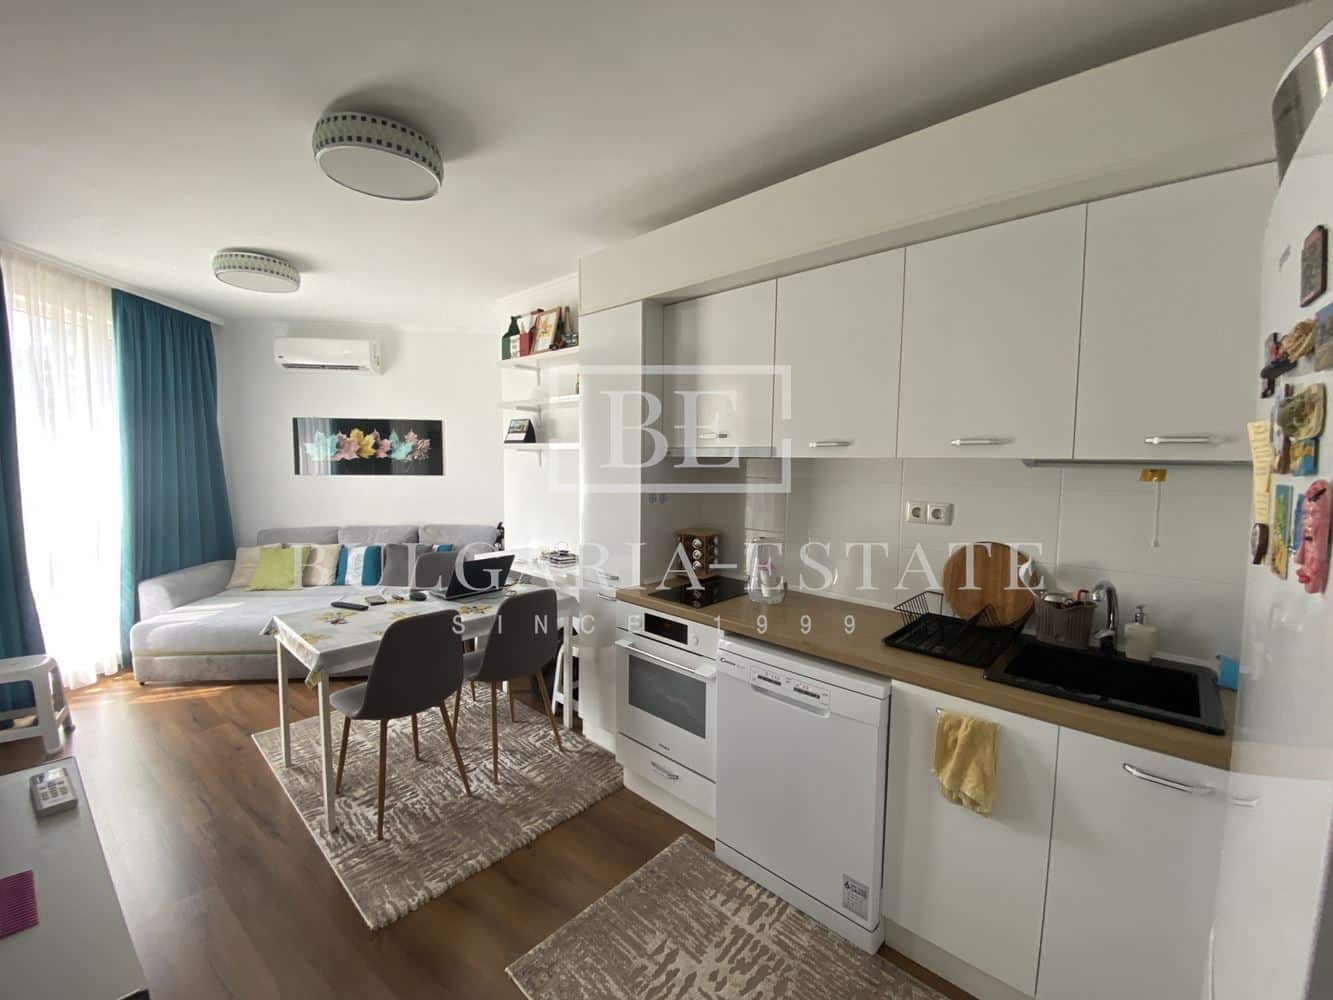 For sale 2-bedroom apartment, gr. Varna, Briz - 0